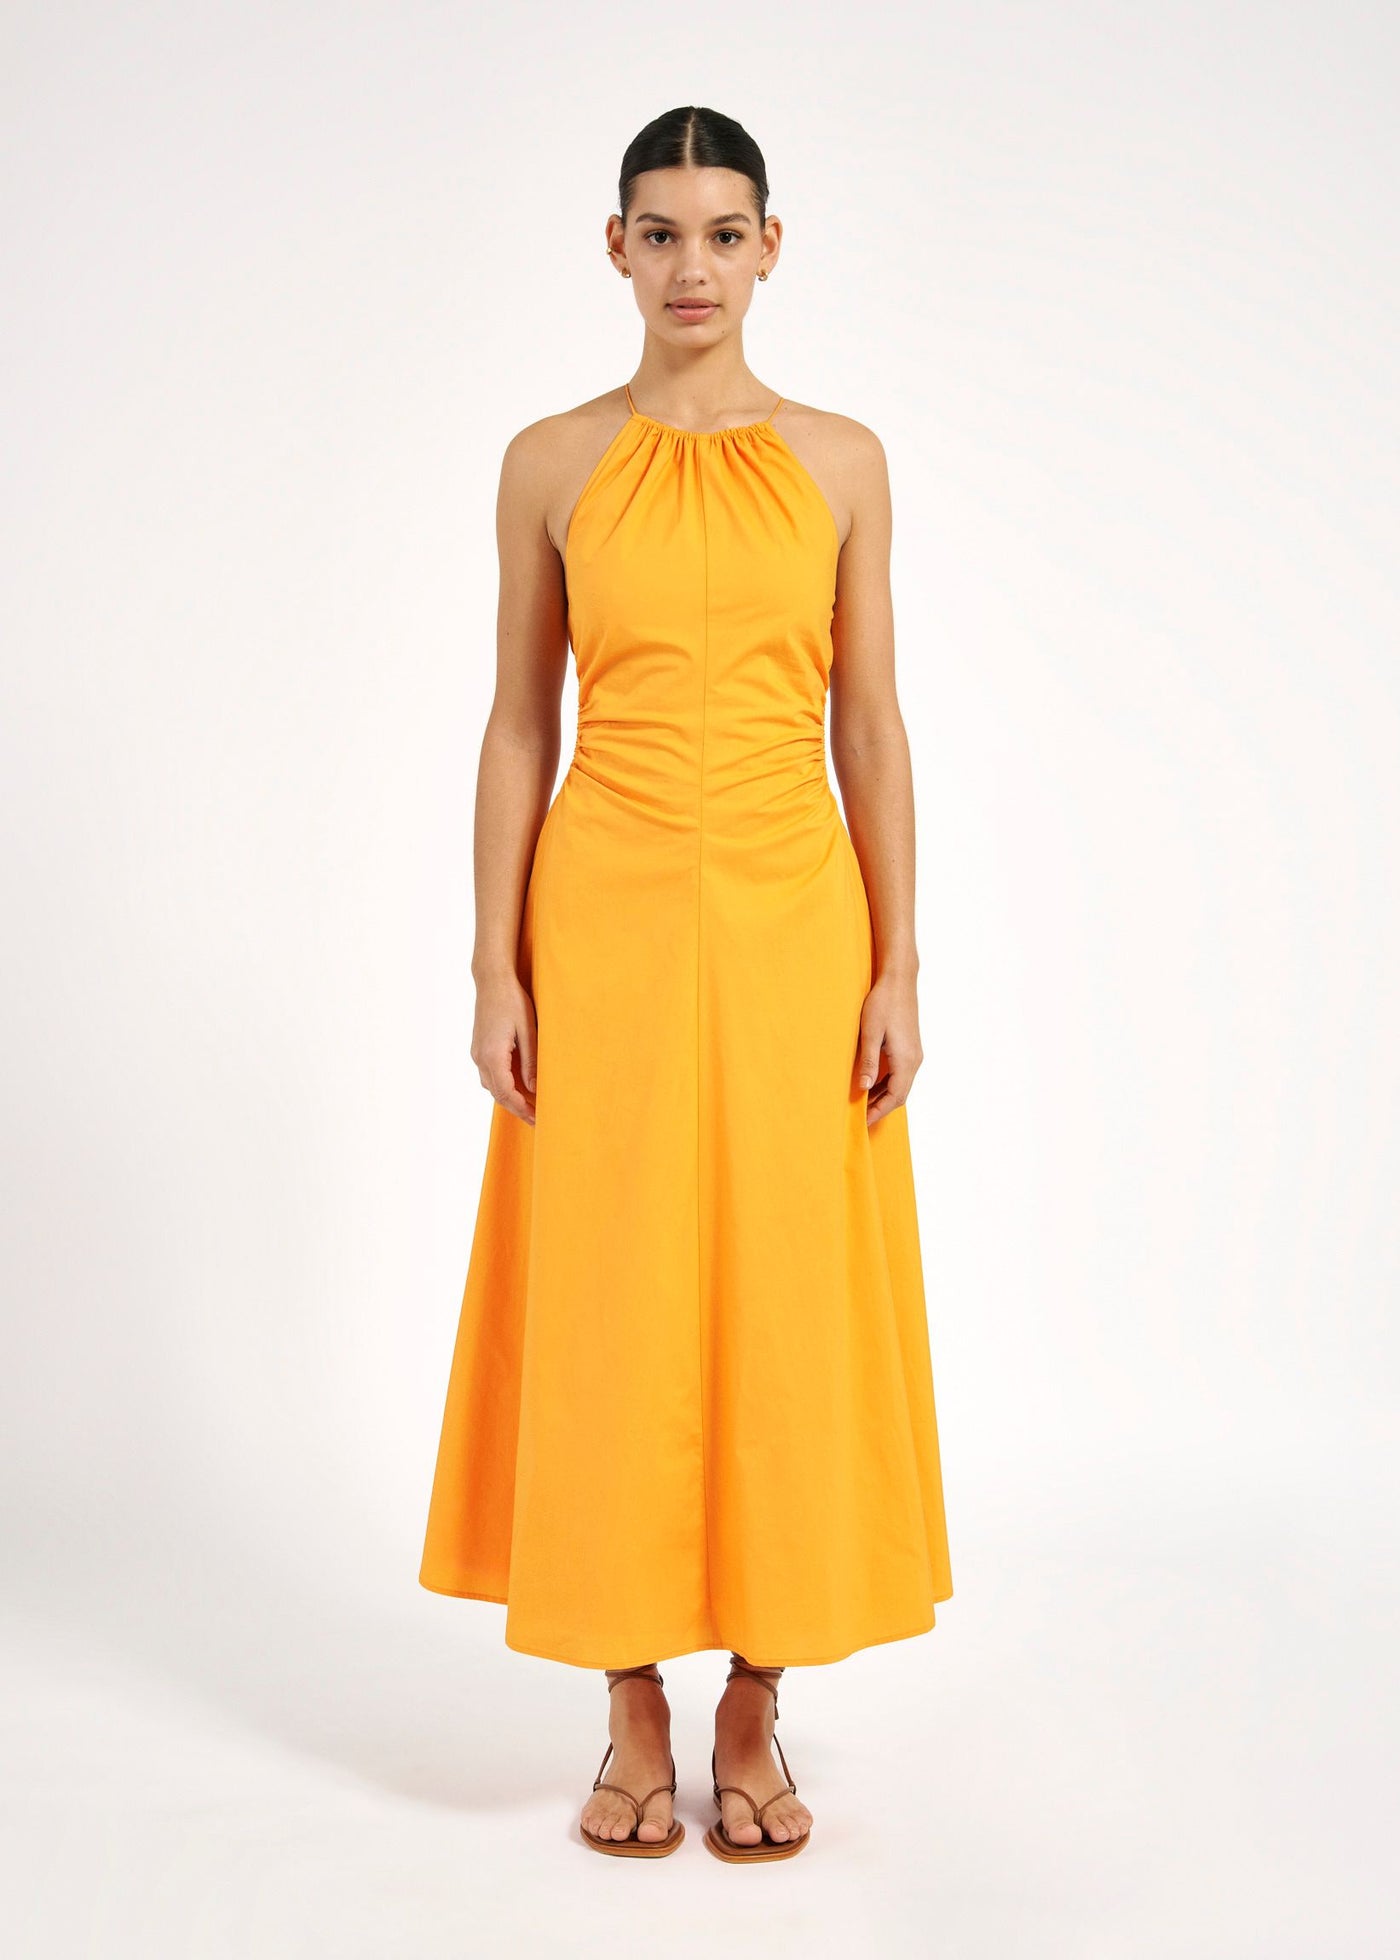 Evy Dress - Tangerine